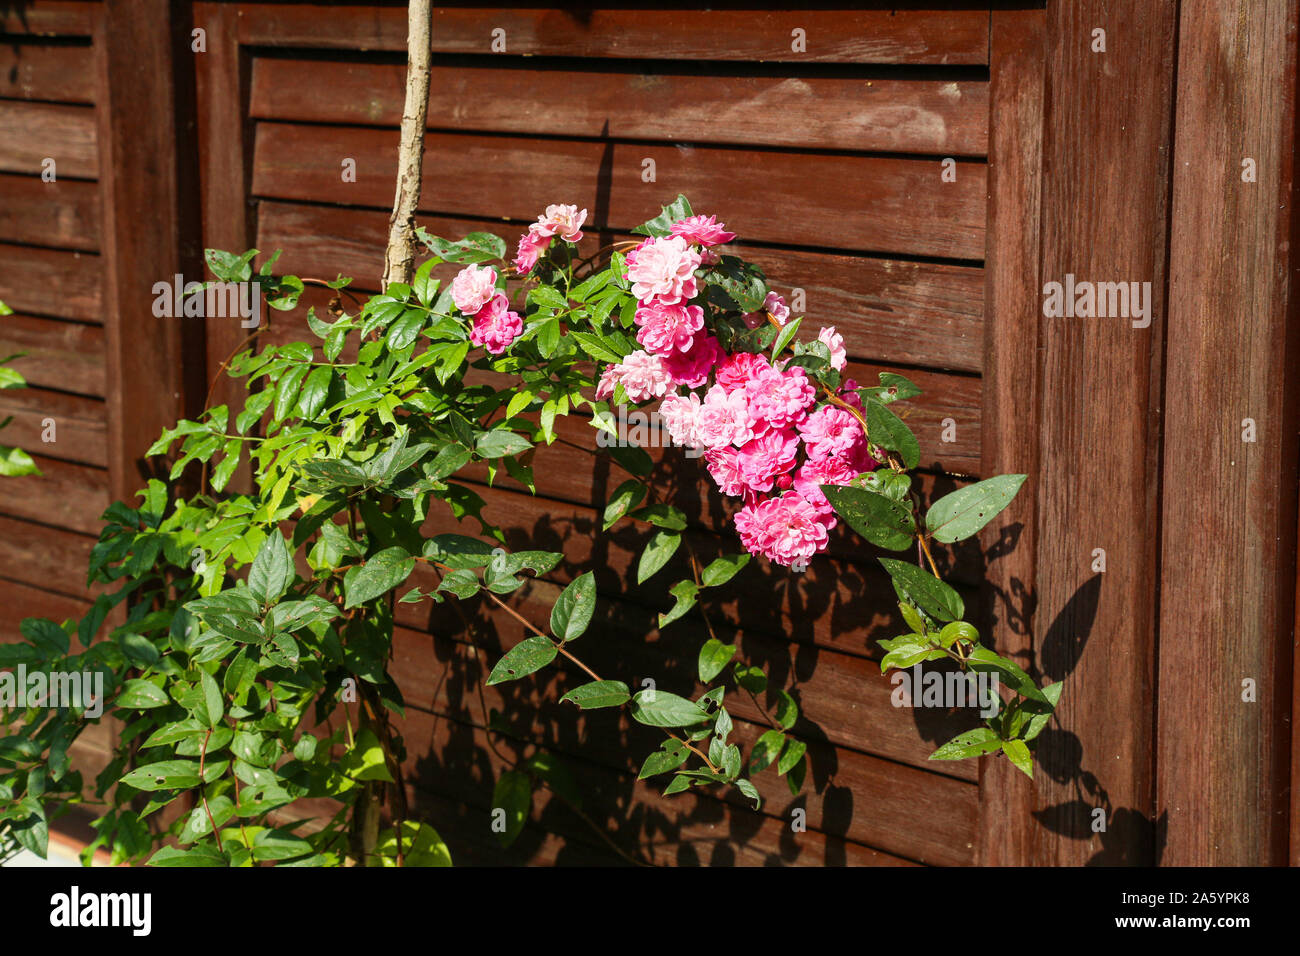 Clove Pink Dianthus caryophyllus Flower, Grenadin Pink, Brown Wooden backround Stock Photo